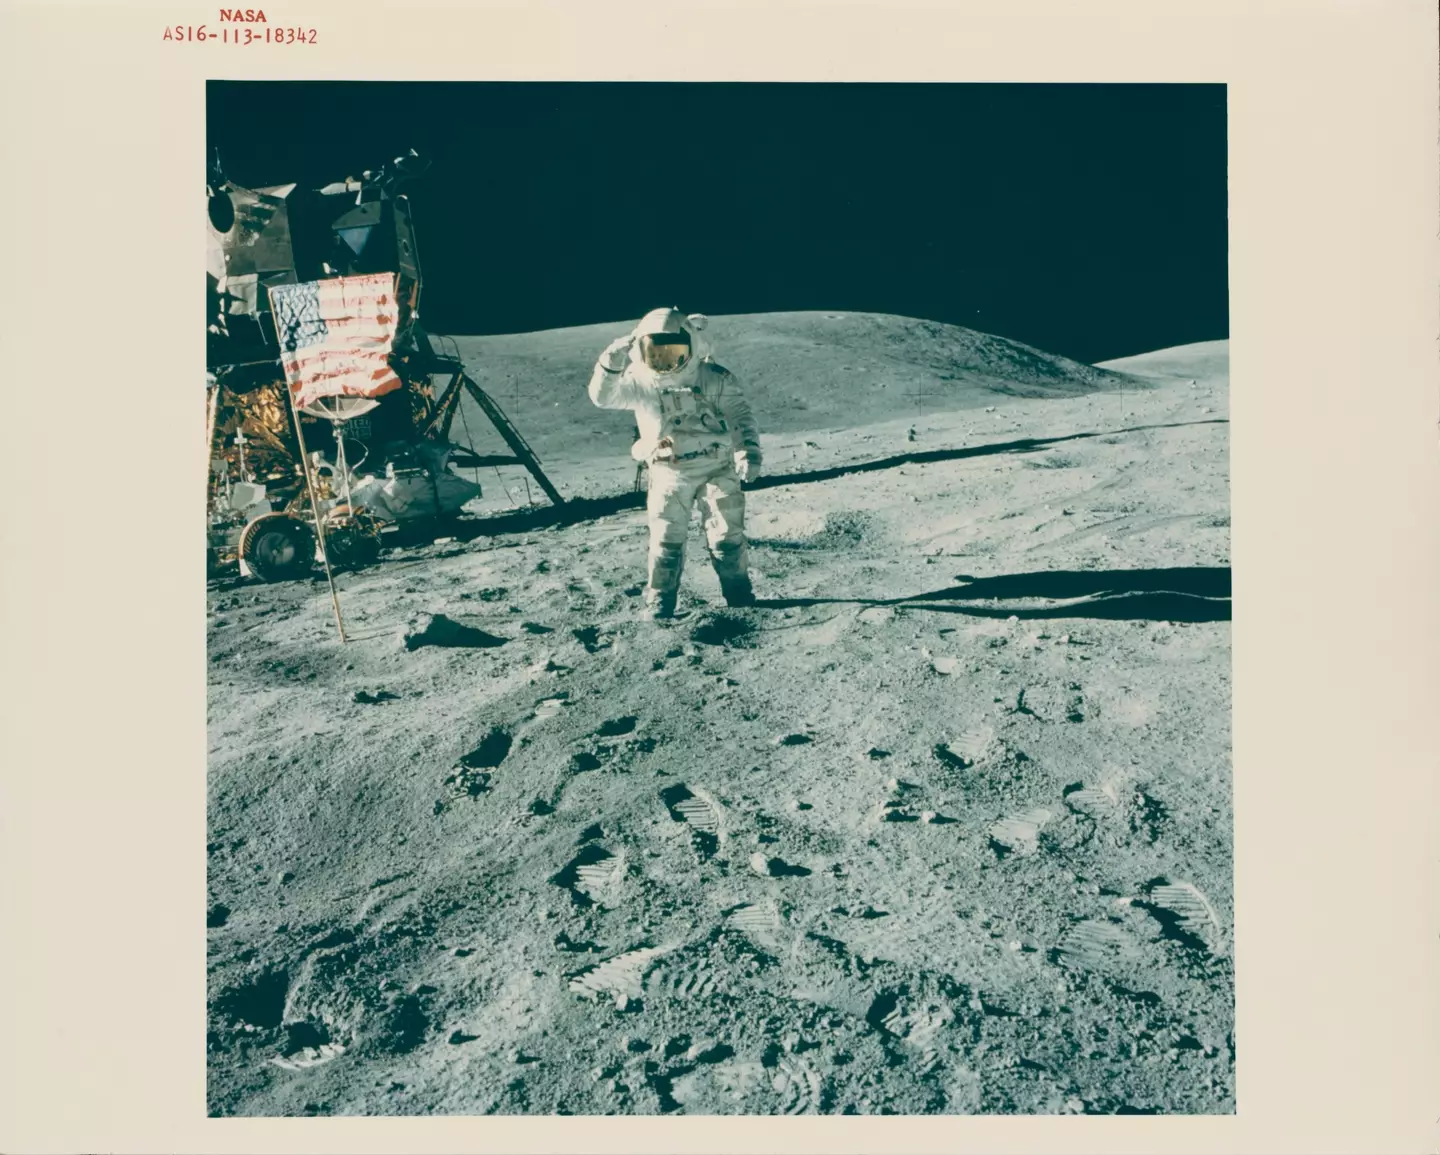 Charles Duke on the Moon.